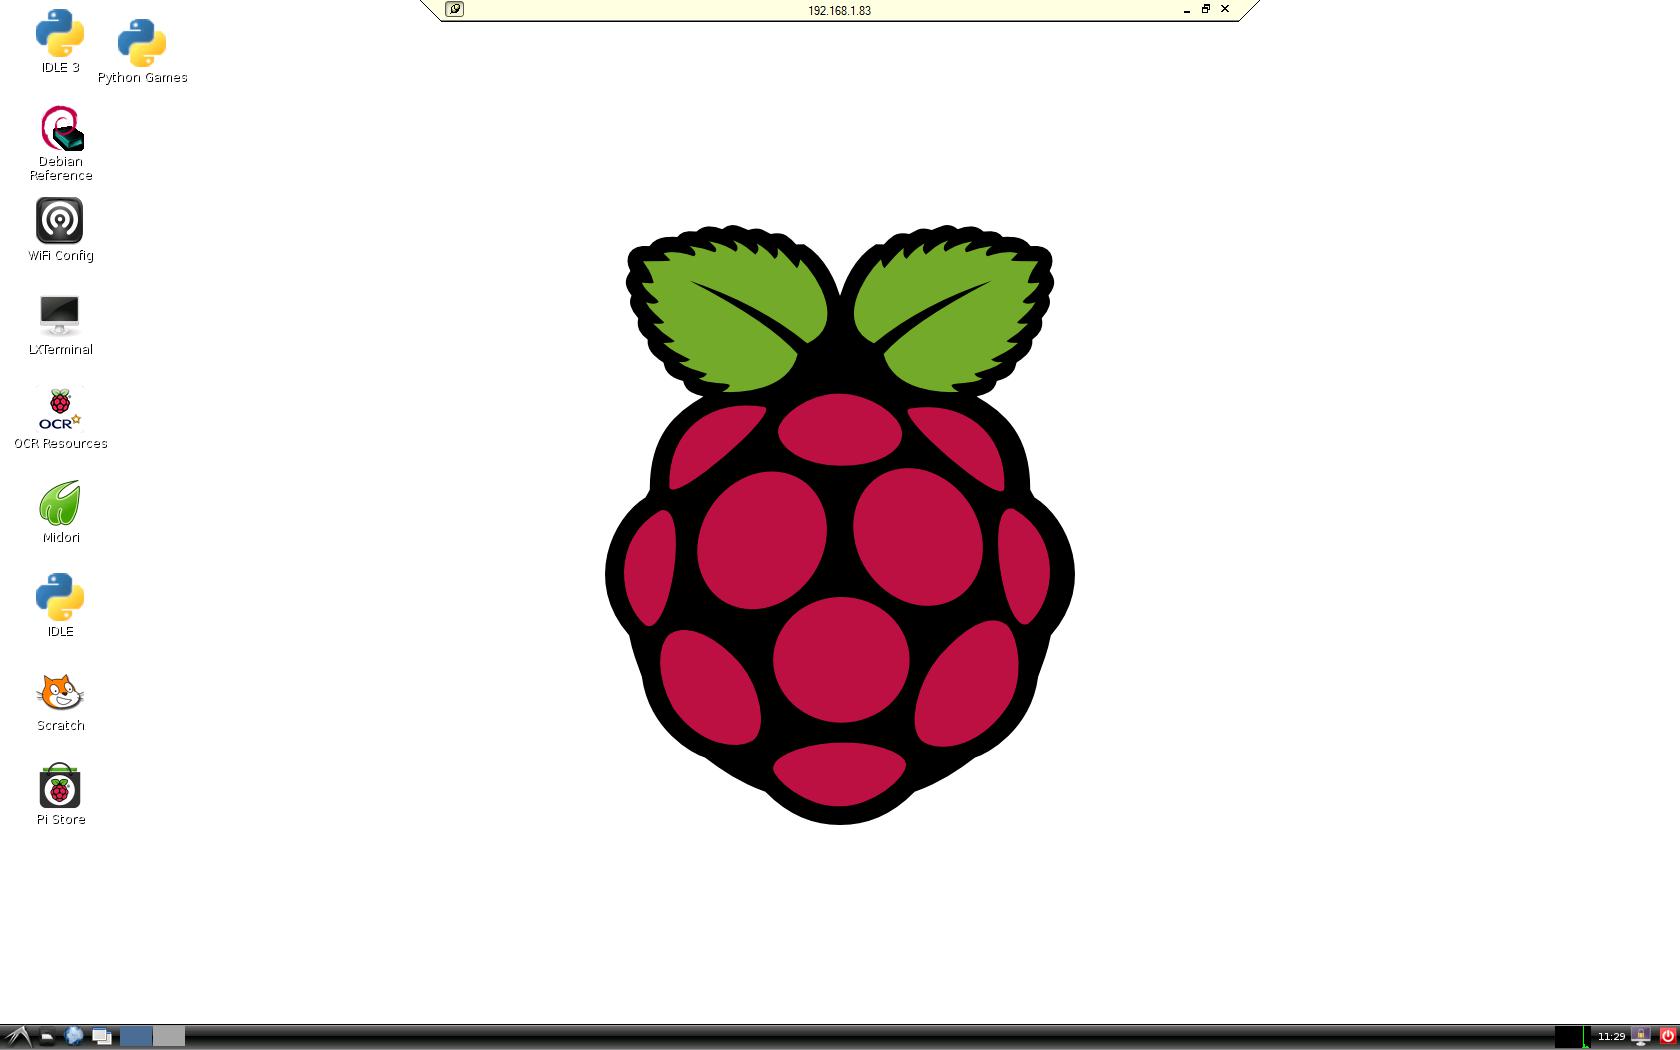 Remotely Accessing the Raspberry Pi via RDP - GUI Mode